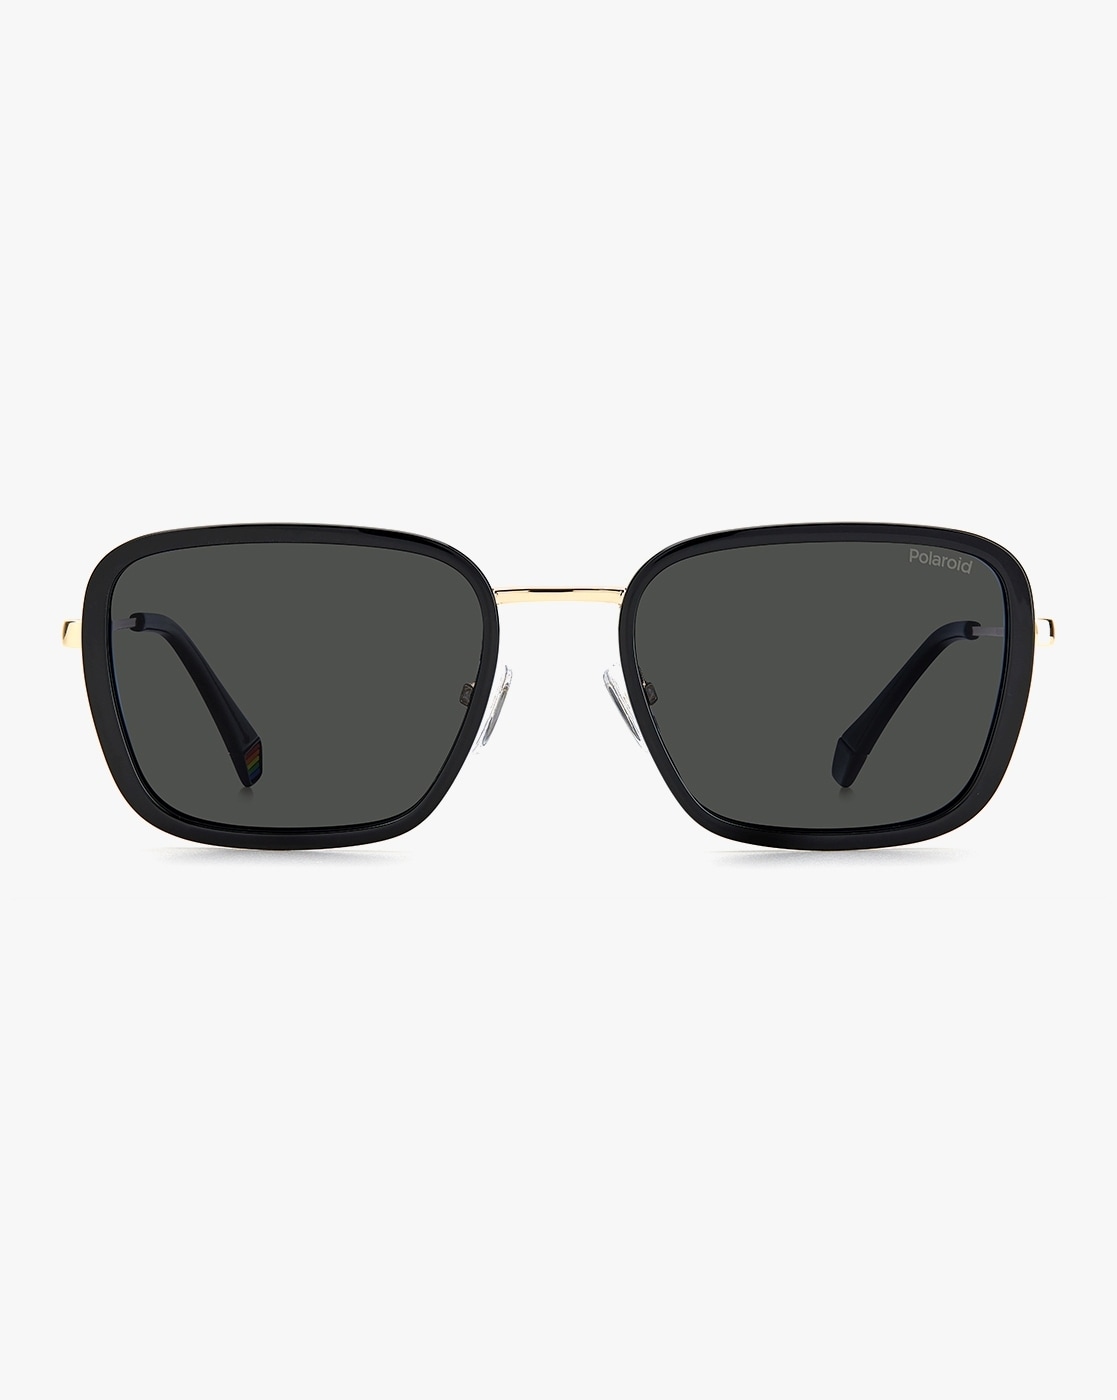 Otherworldly Sunglasses (Black / Black) – Congruent Space *₊˚⁎*₊